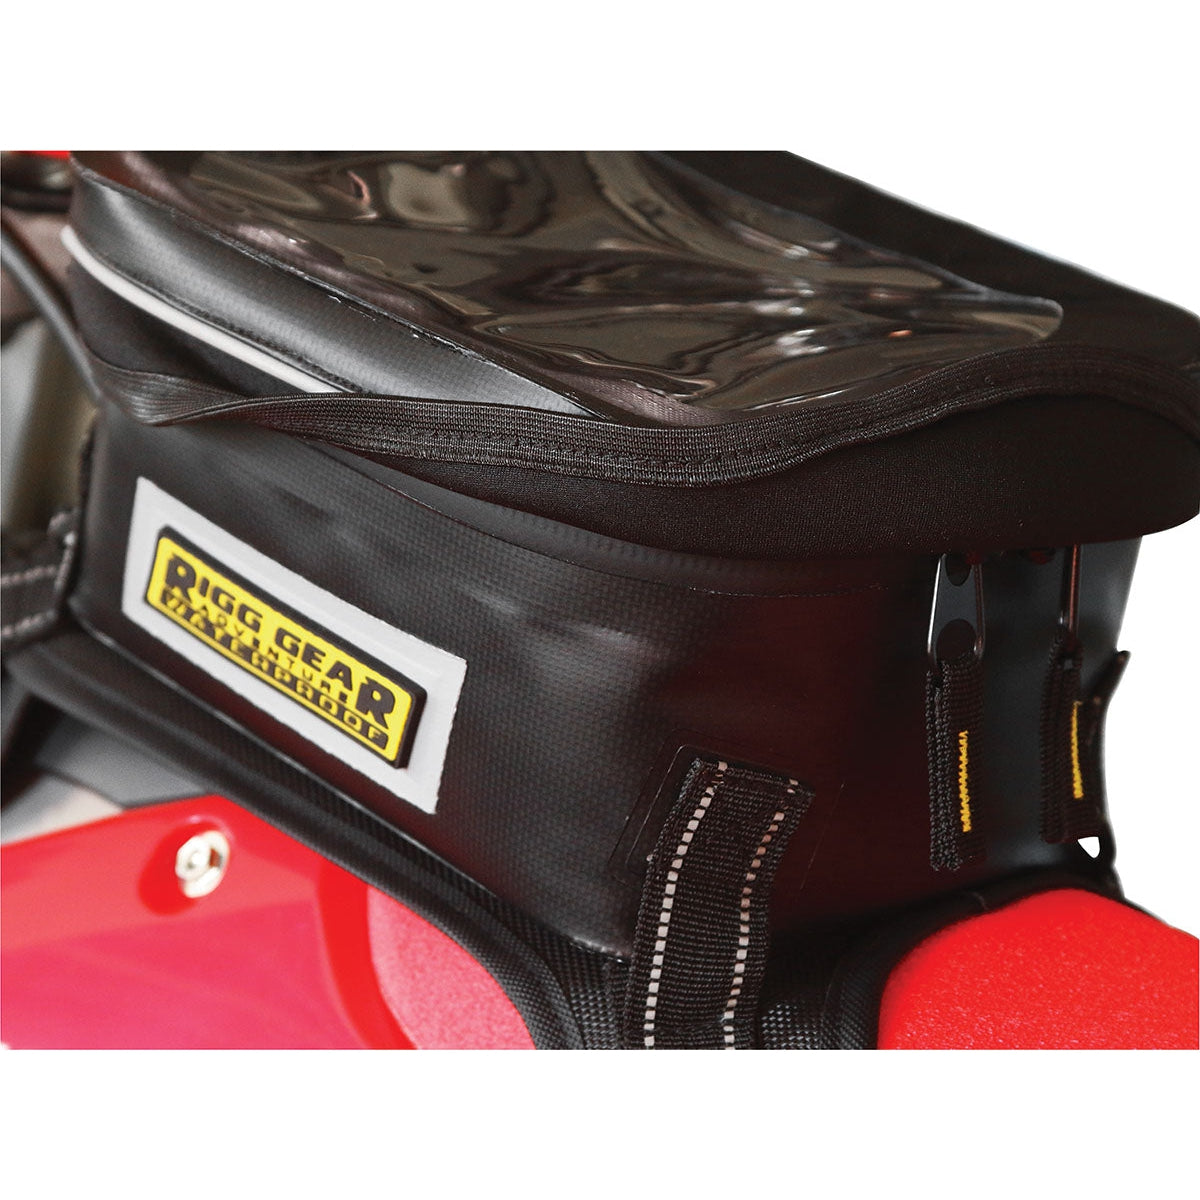 Rigg Gear Adventure SE-3060 Hurricane Dual-Sport and Enduro Motorcycle Waterproof Tank Bag